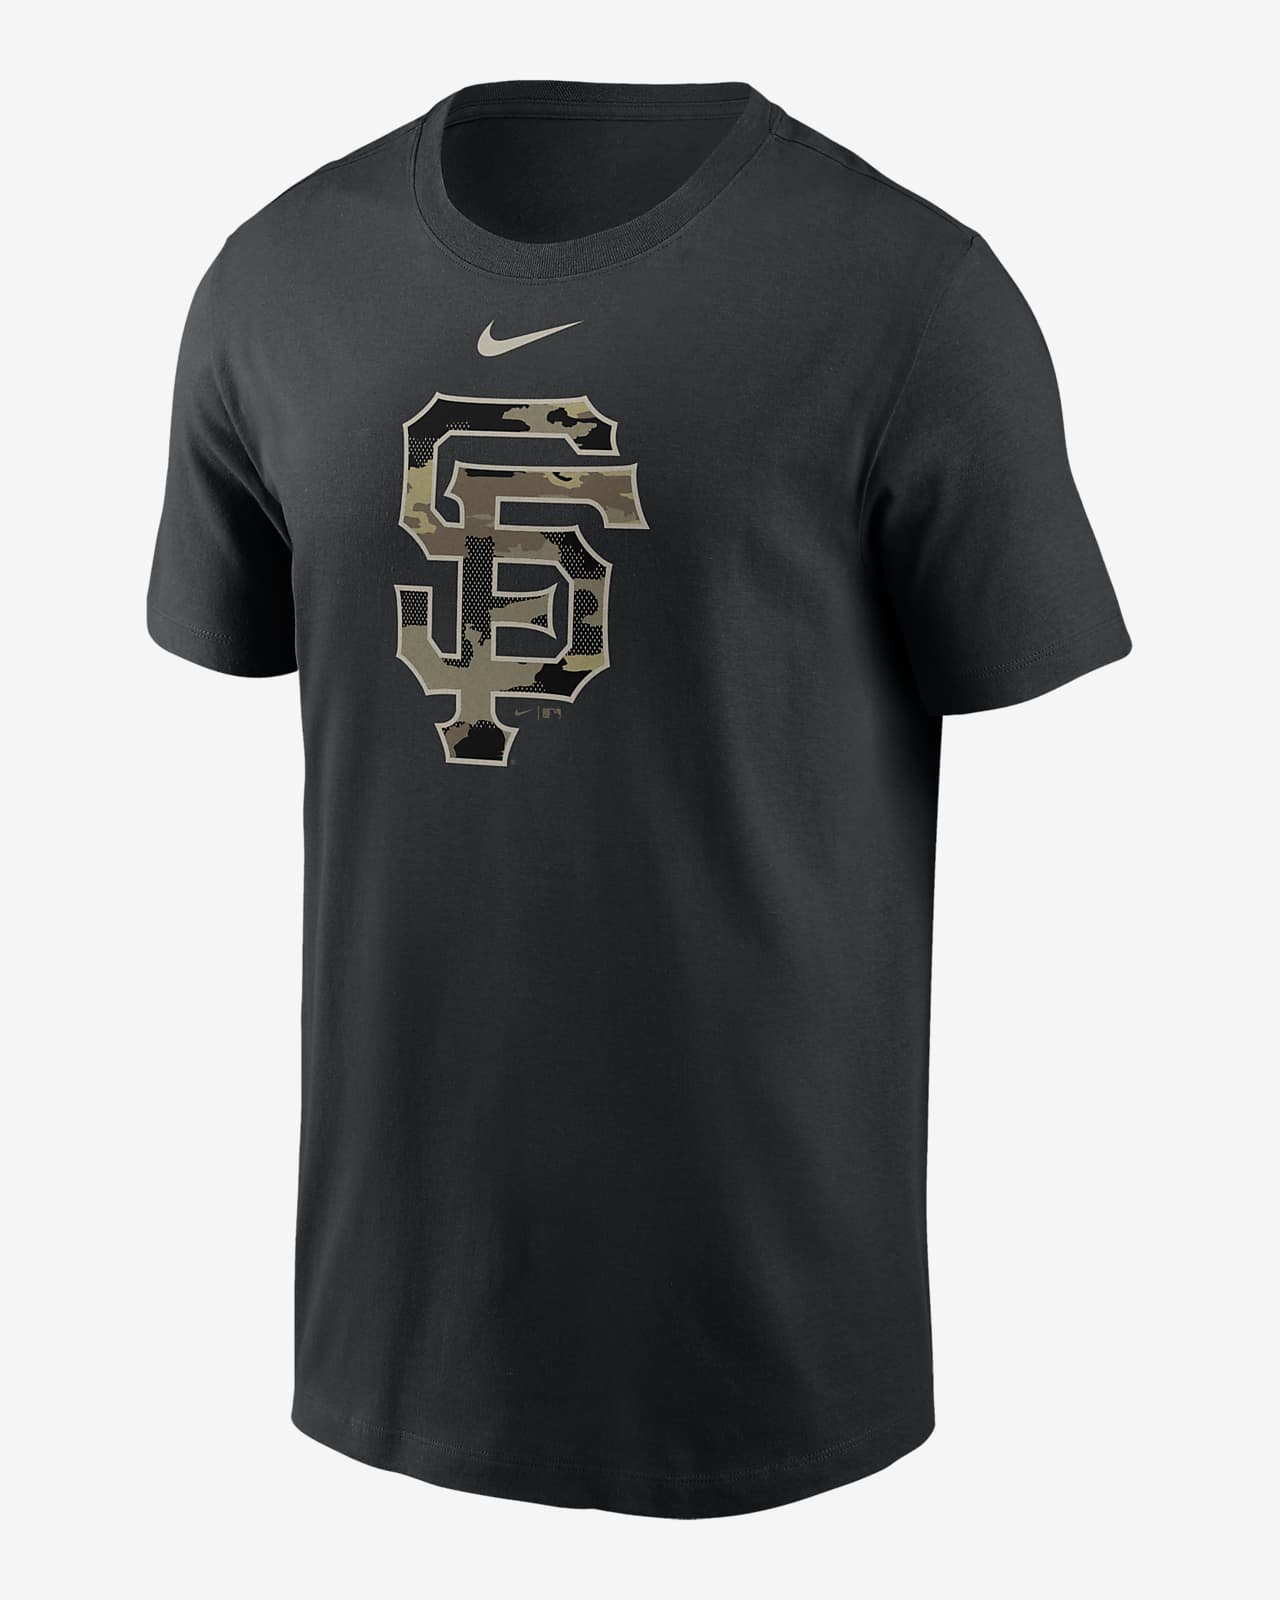 Nike Camo Logo (MLB San Francisco Giants) Men's T-Shirt